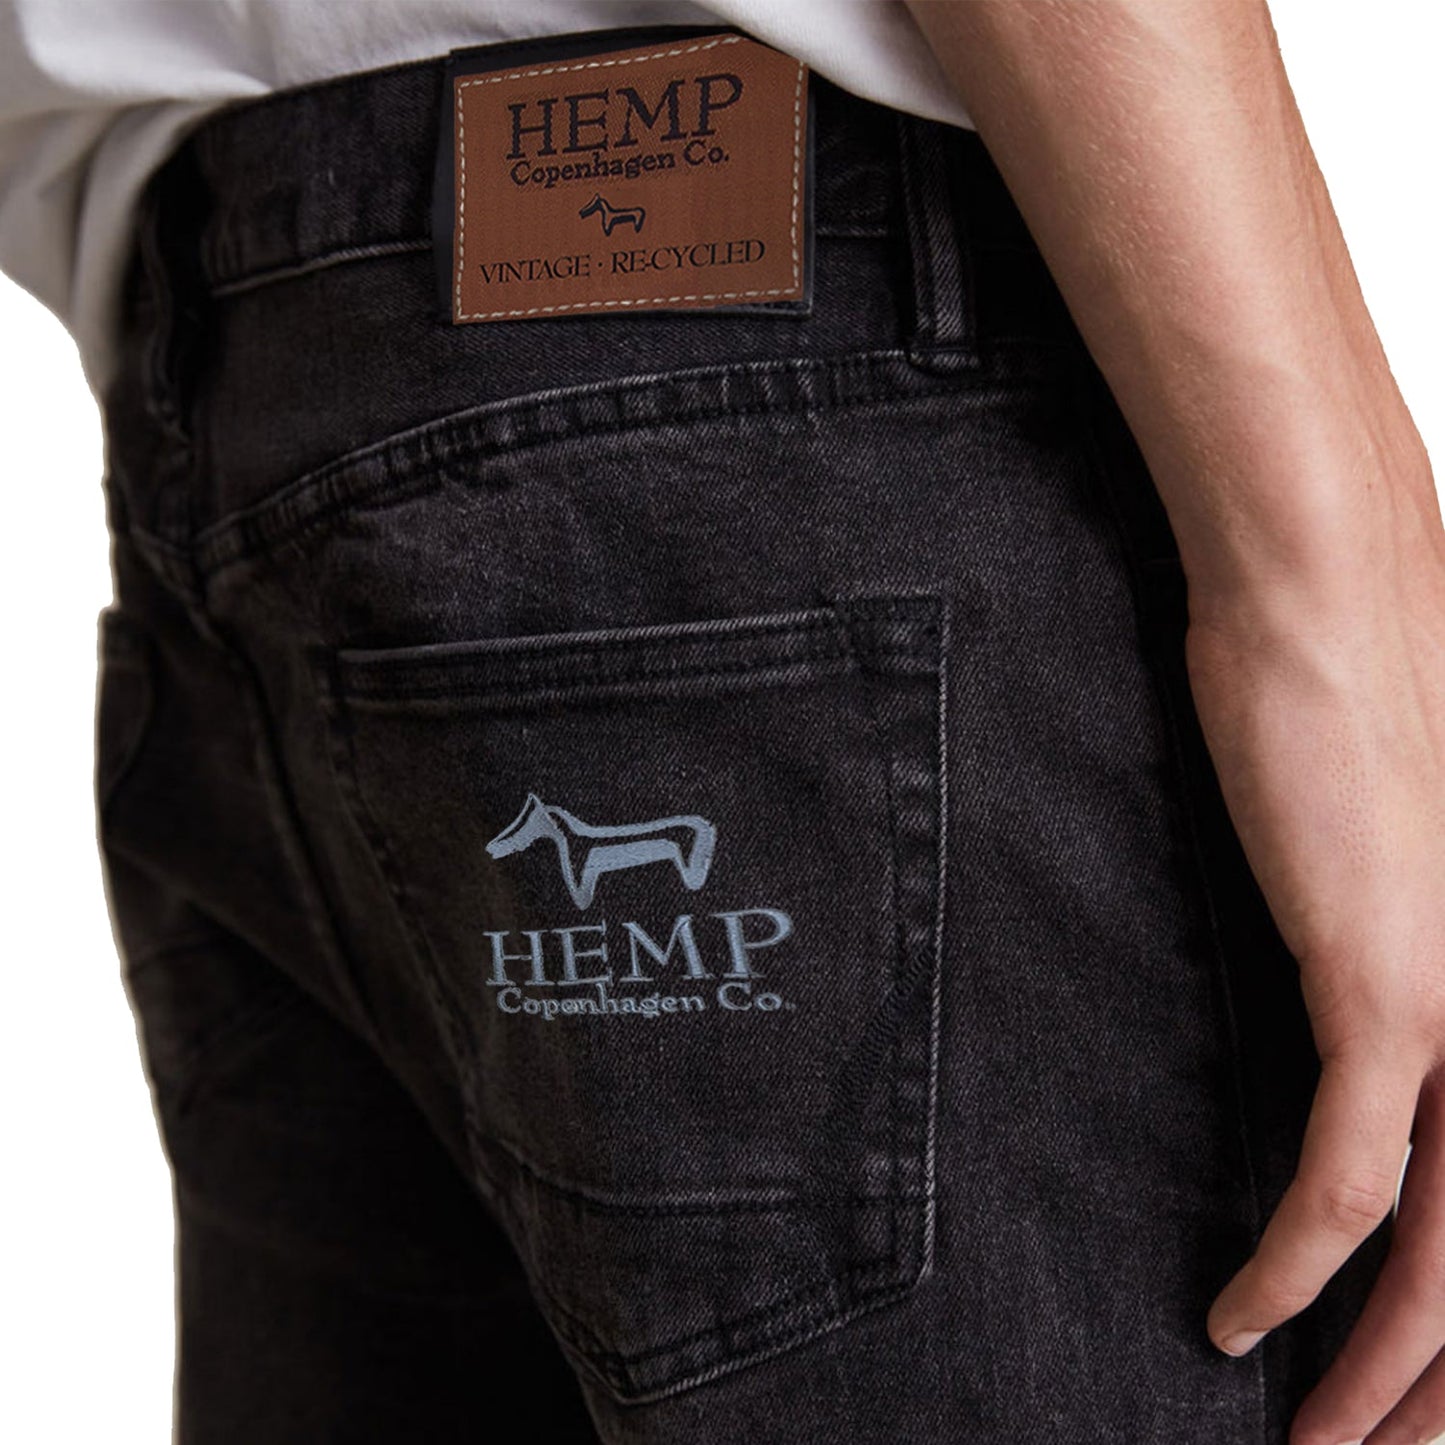 Hemp Copenhagen Co. Your Favourite Jeans, re-made in 100% Hemp